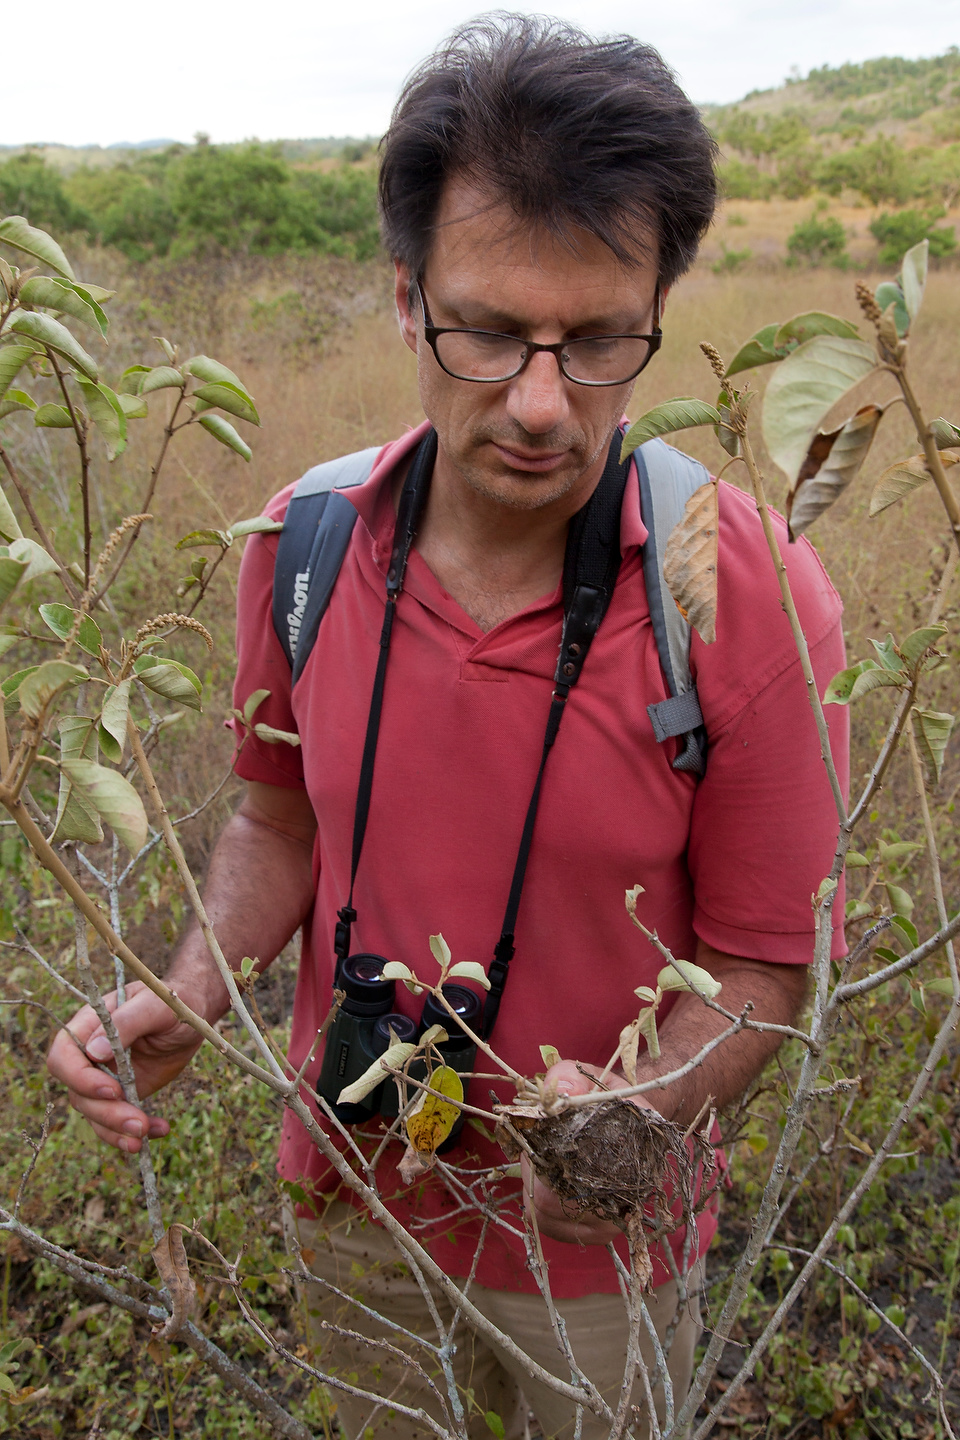 George Heimpel inspecting abandoned bird nest for Philornis flies, Ecuador 2016